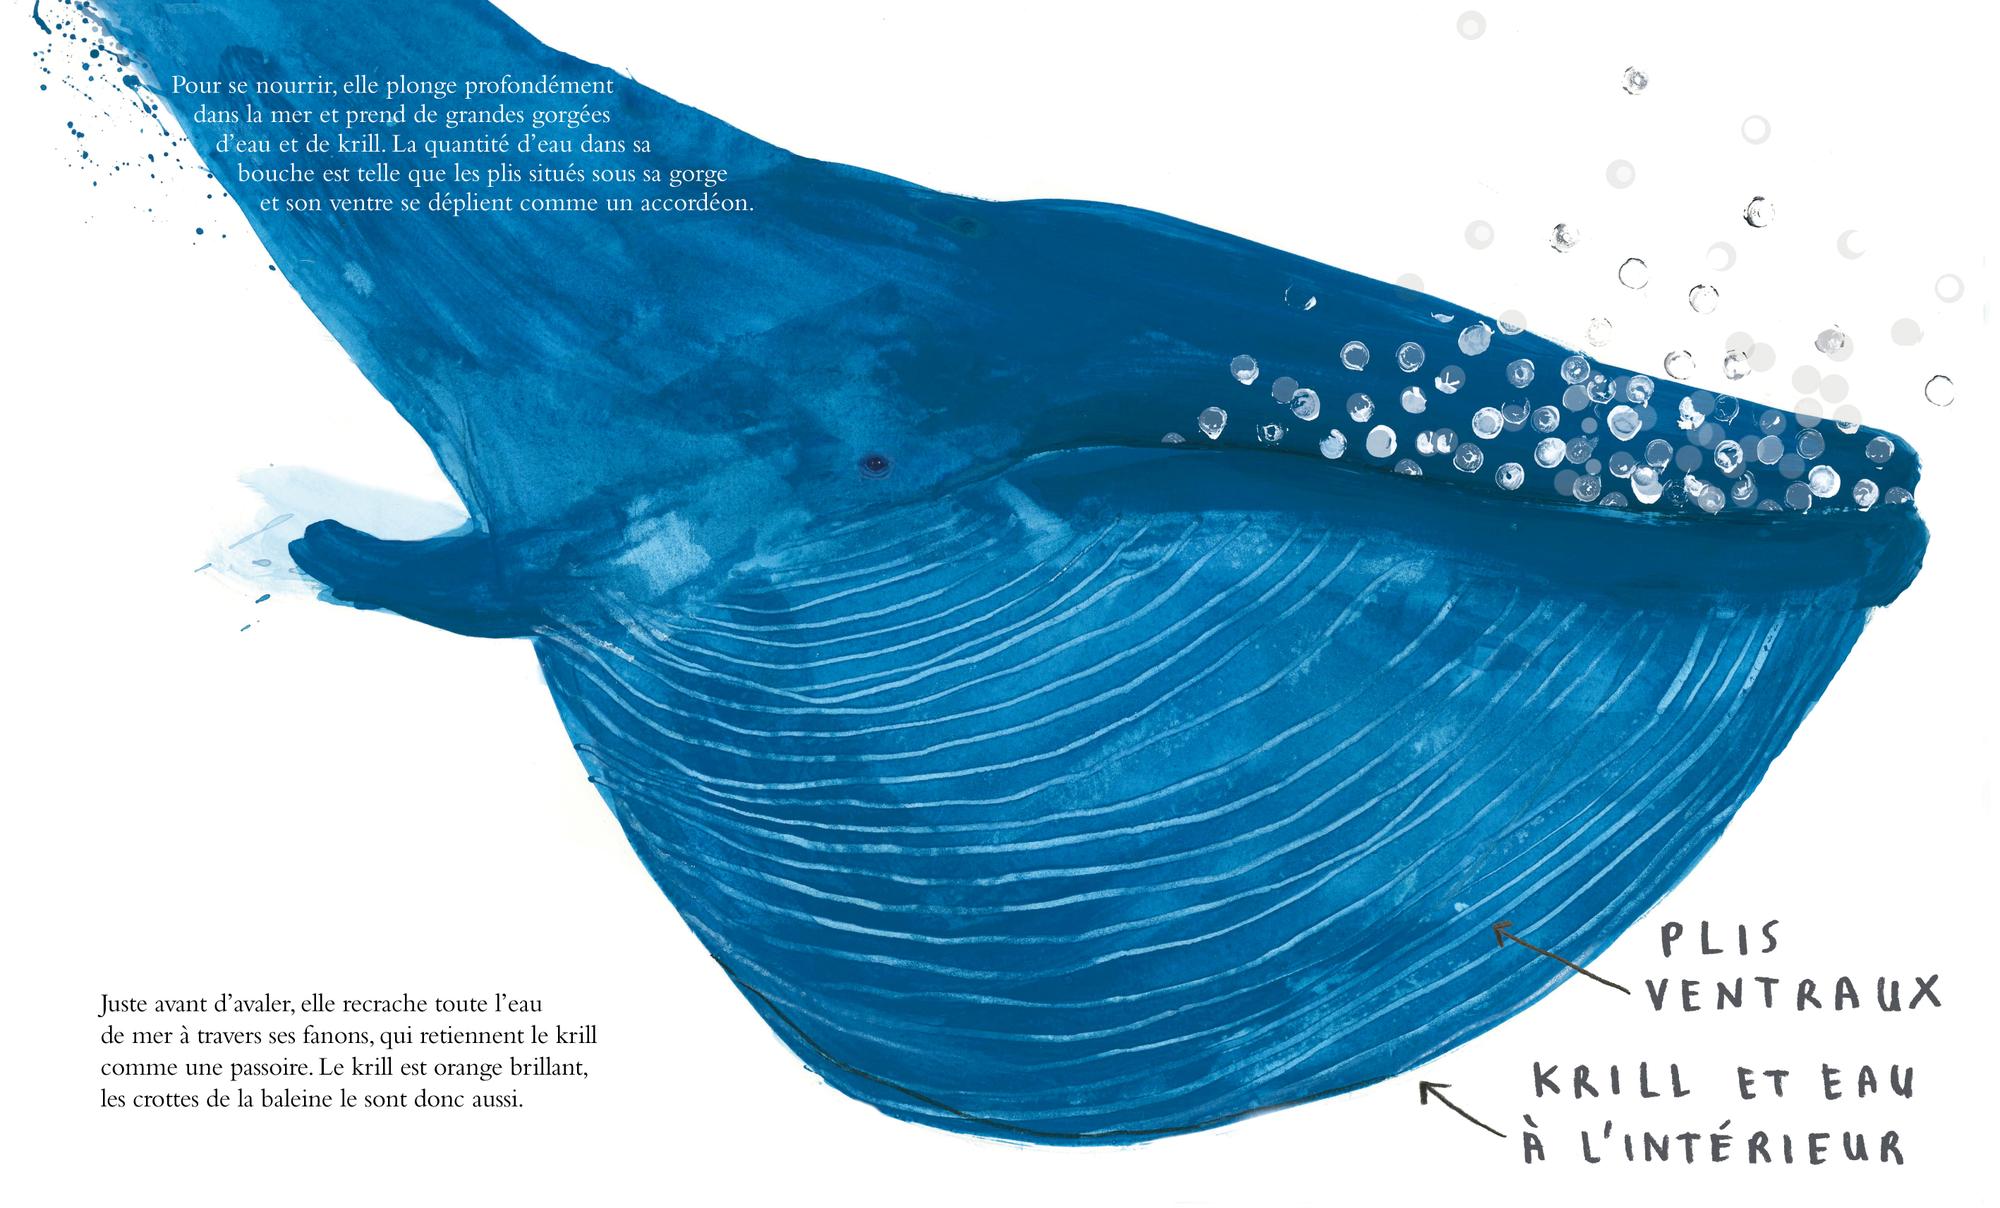 Сердце синего кита весит семьсот килограммов. Синий кит. Изображение кита. Кит синий кит.